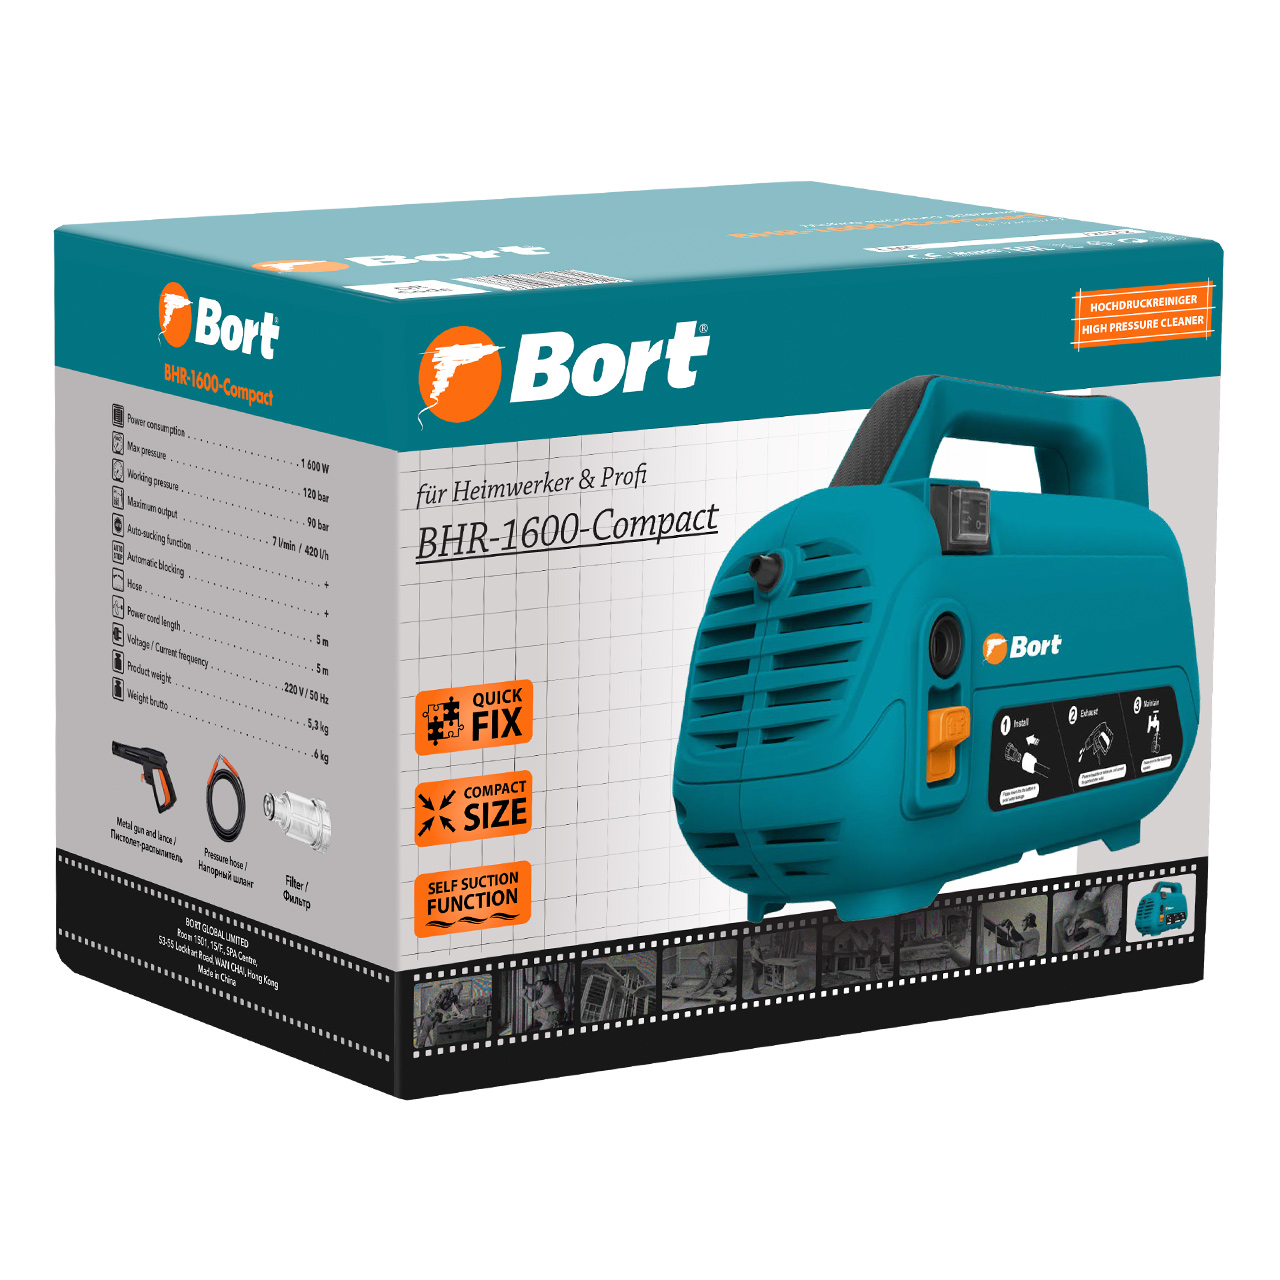    Bort BHR-1600-Compact (93415742)